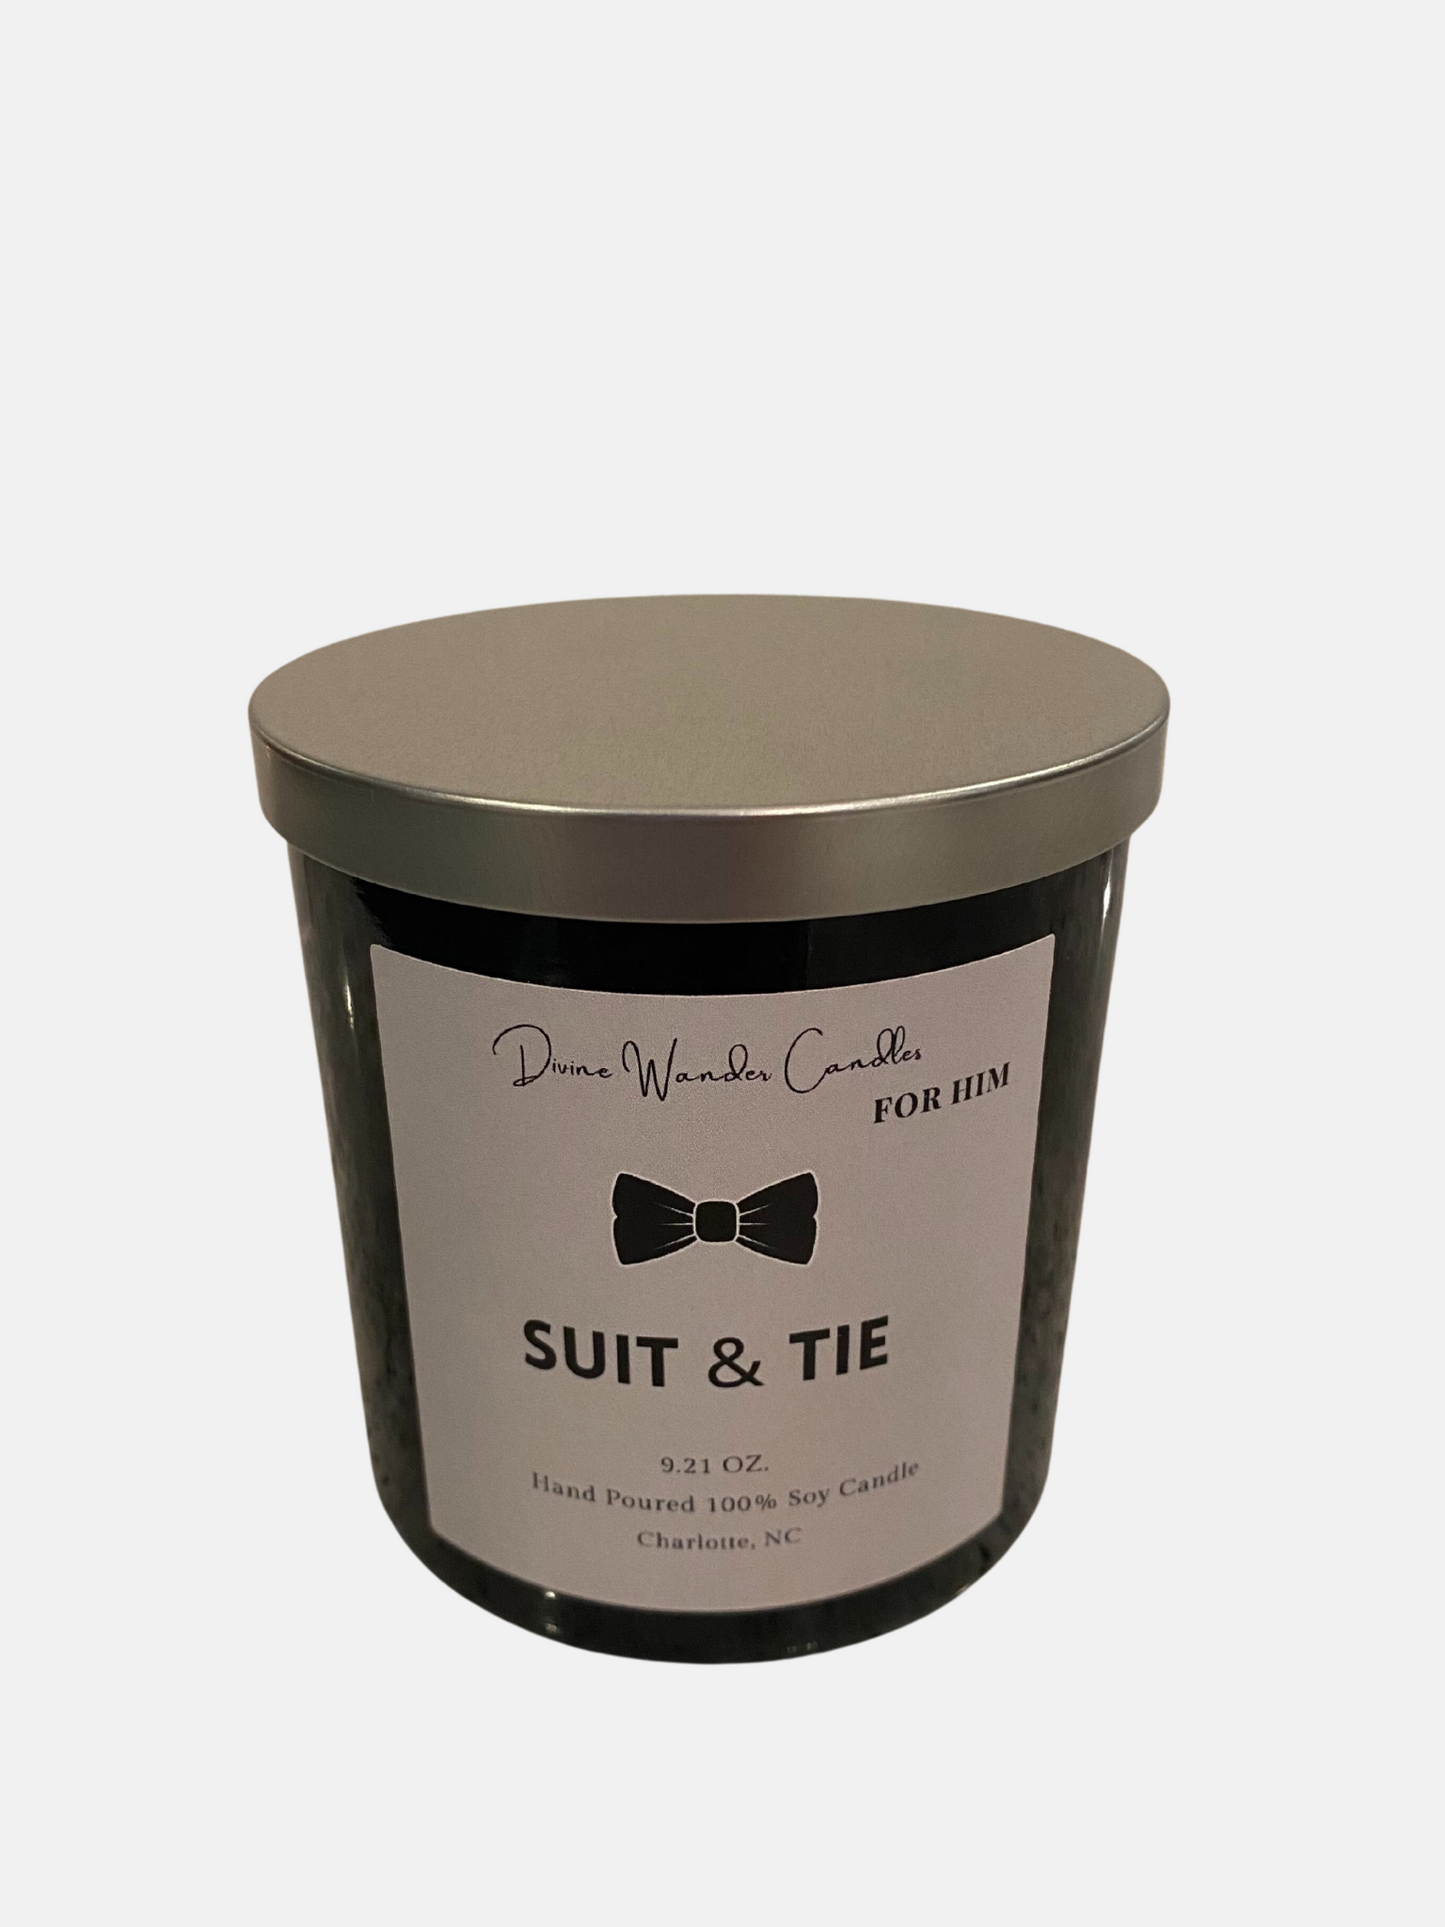 "Suit & Tie"